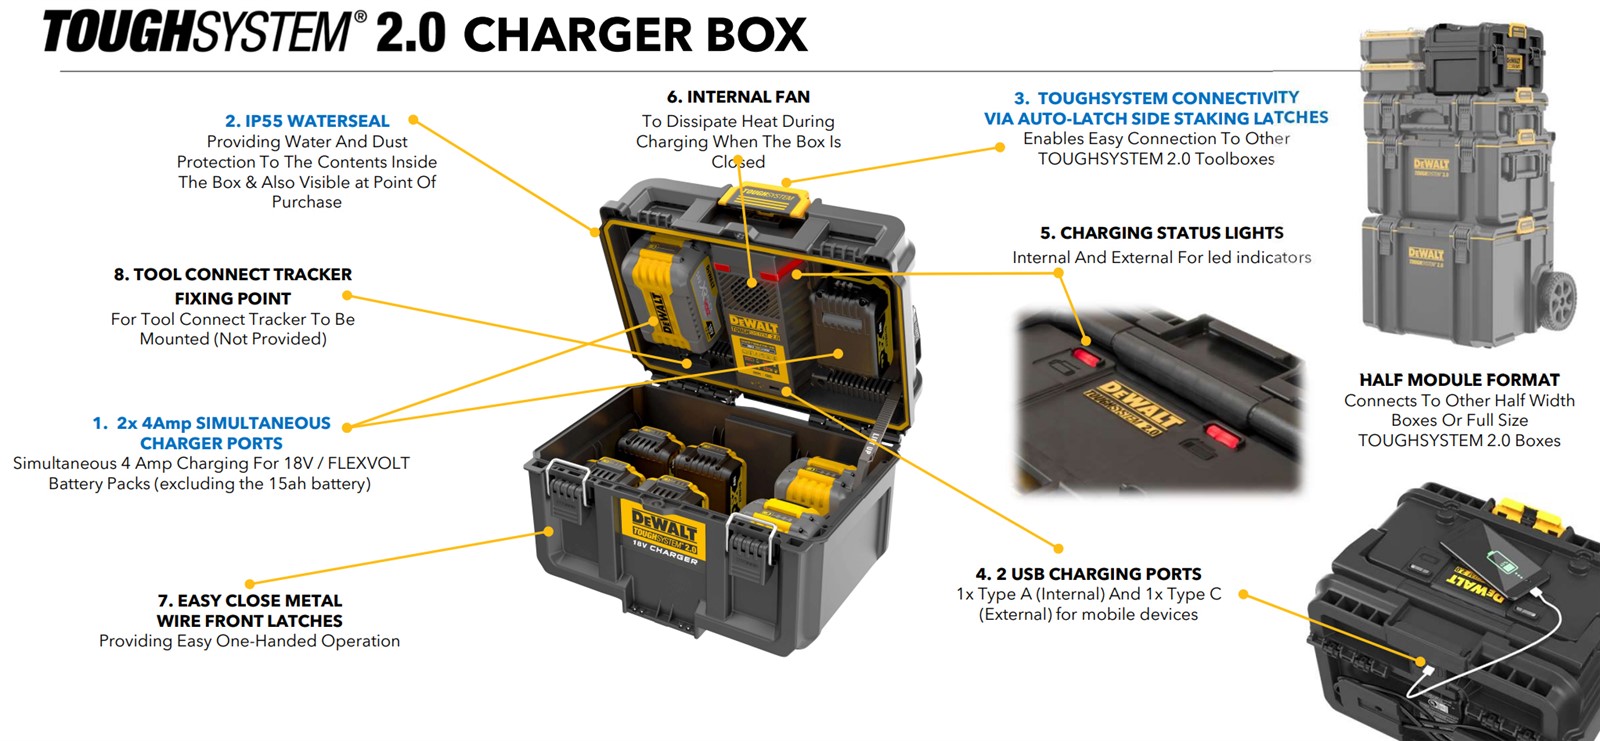 Battery DeWalt USB 54v DWST83470-GB Toughsystem eBay | / 18 2.0 Charger Box Charge XR